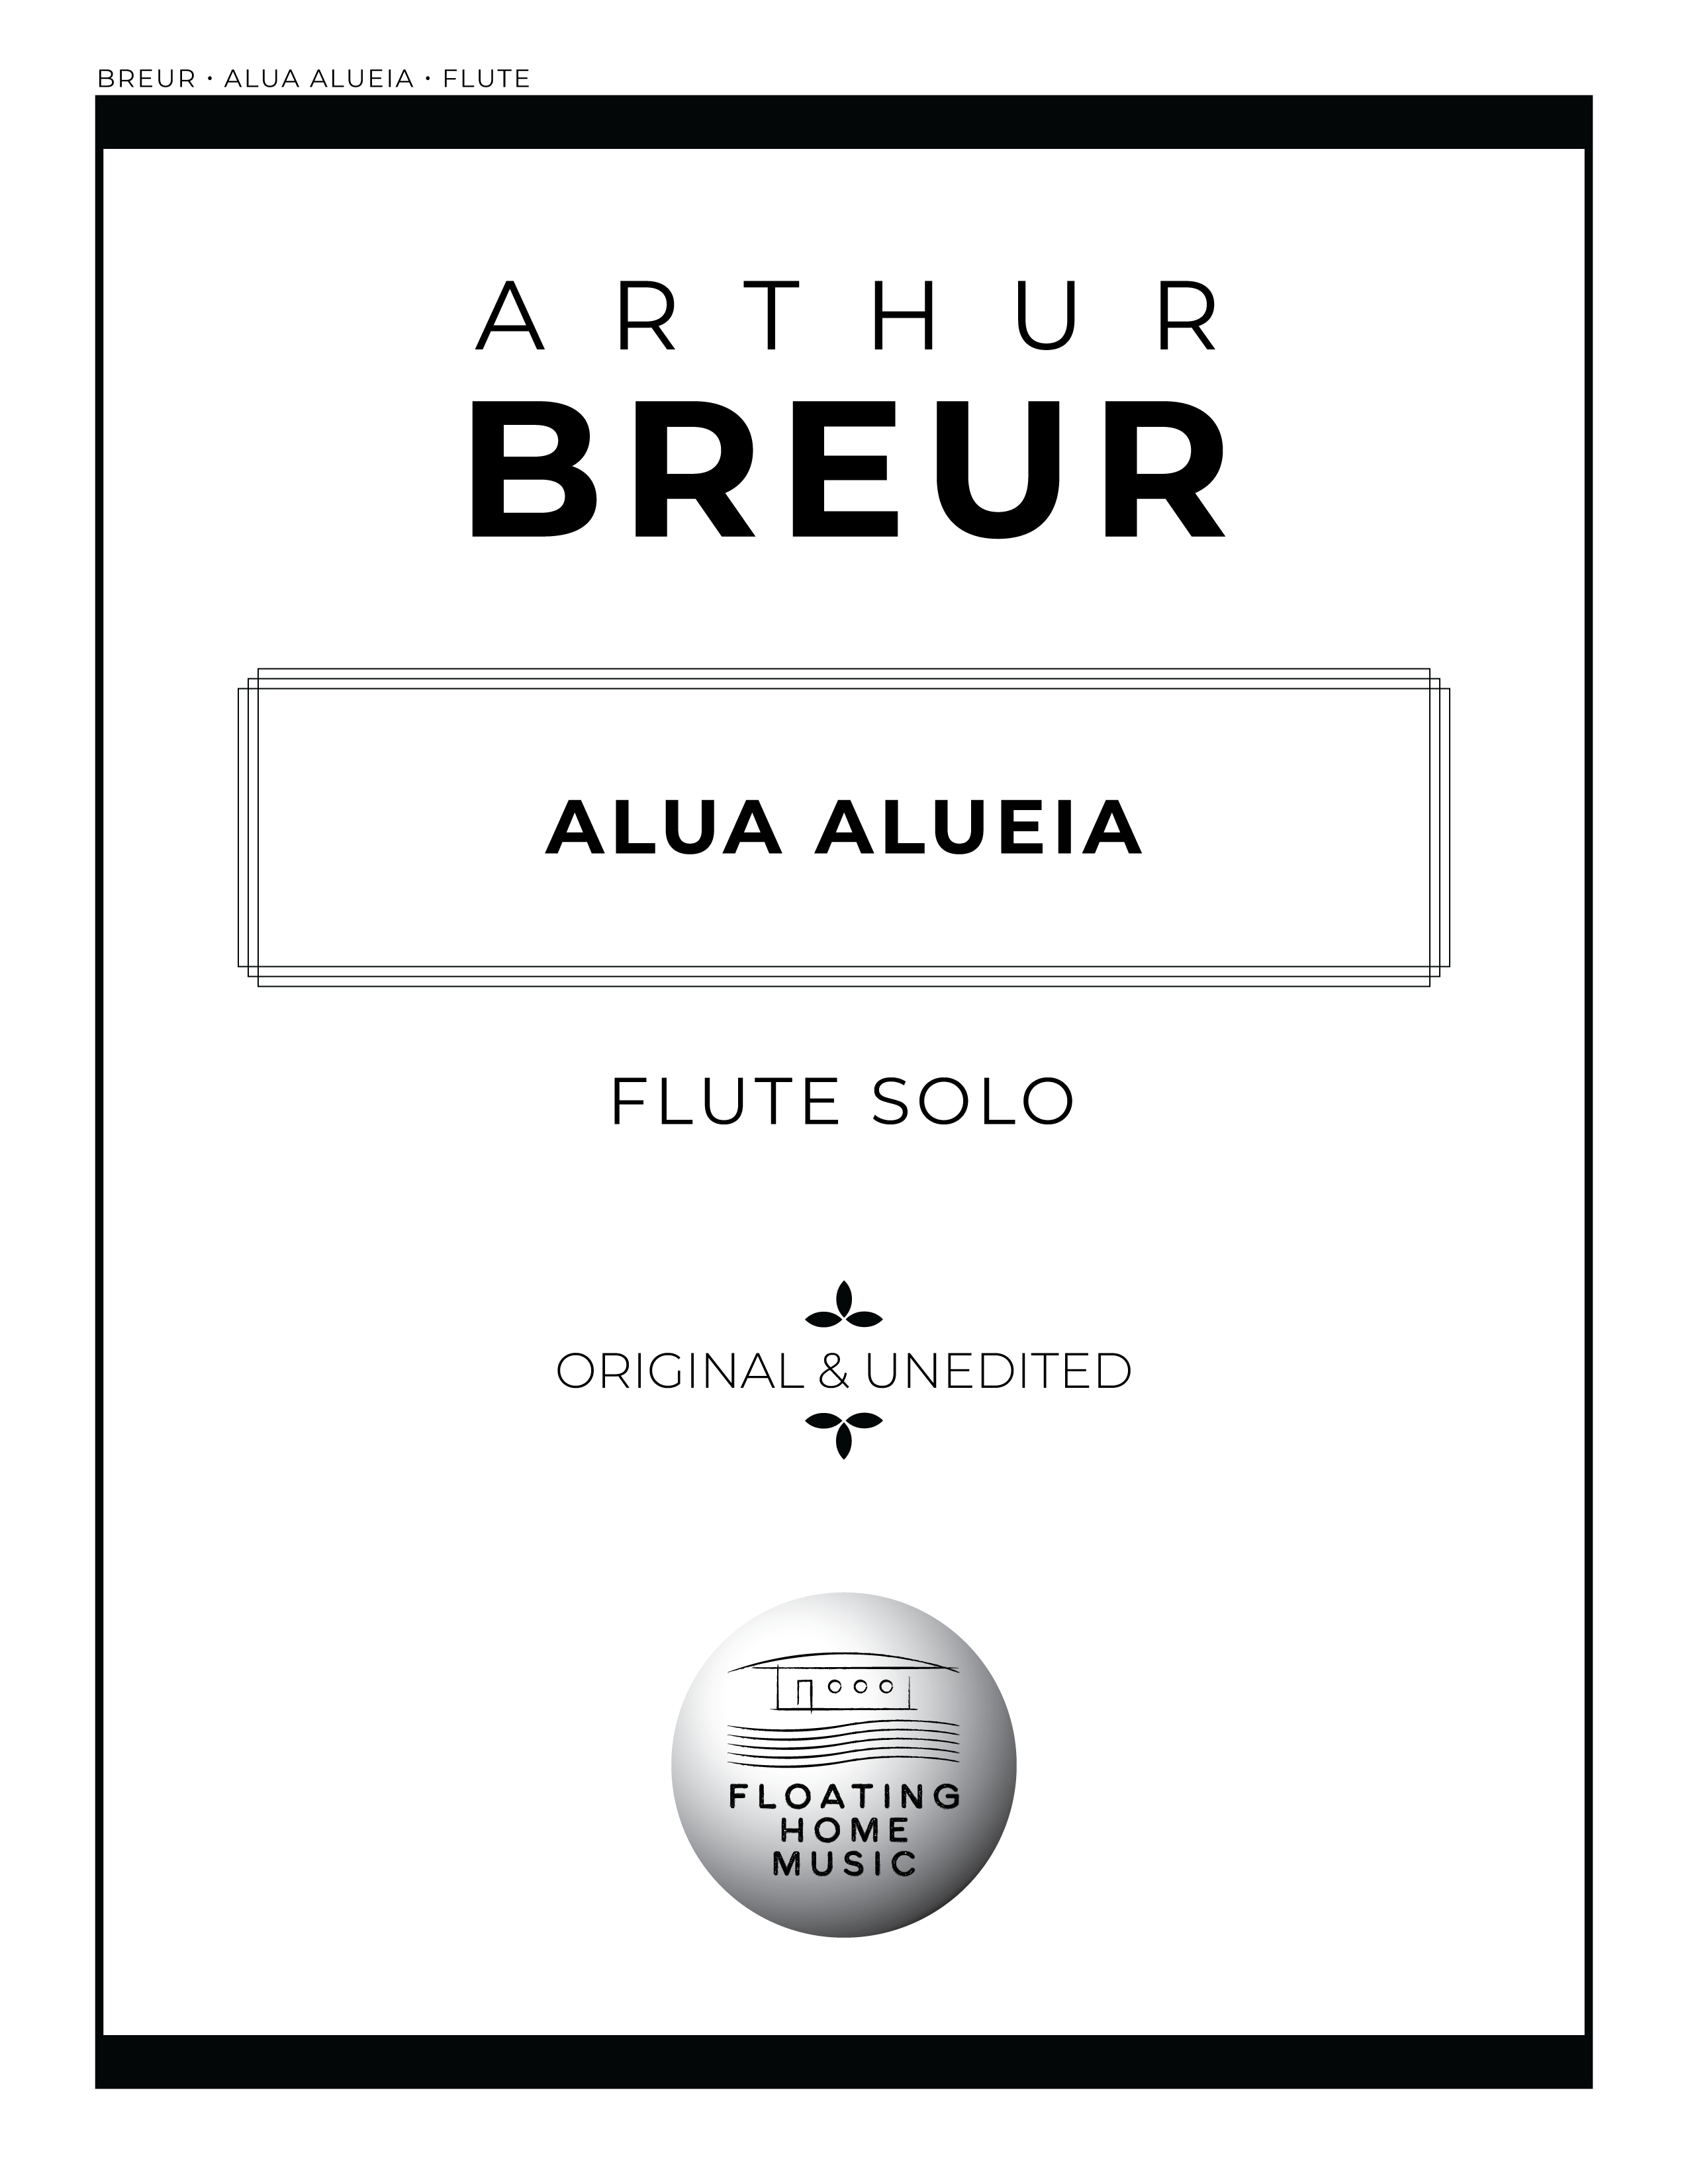 Alua Alueia (Flute Solo) - composed by Arthur Breur - Sheet Music Cover Image